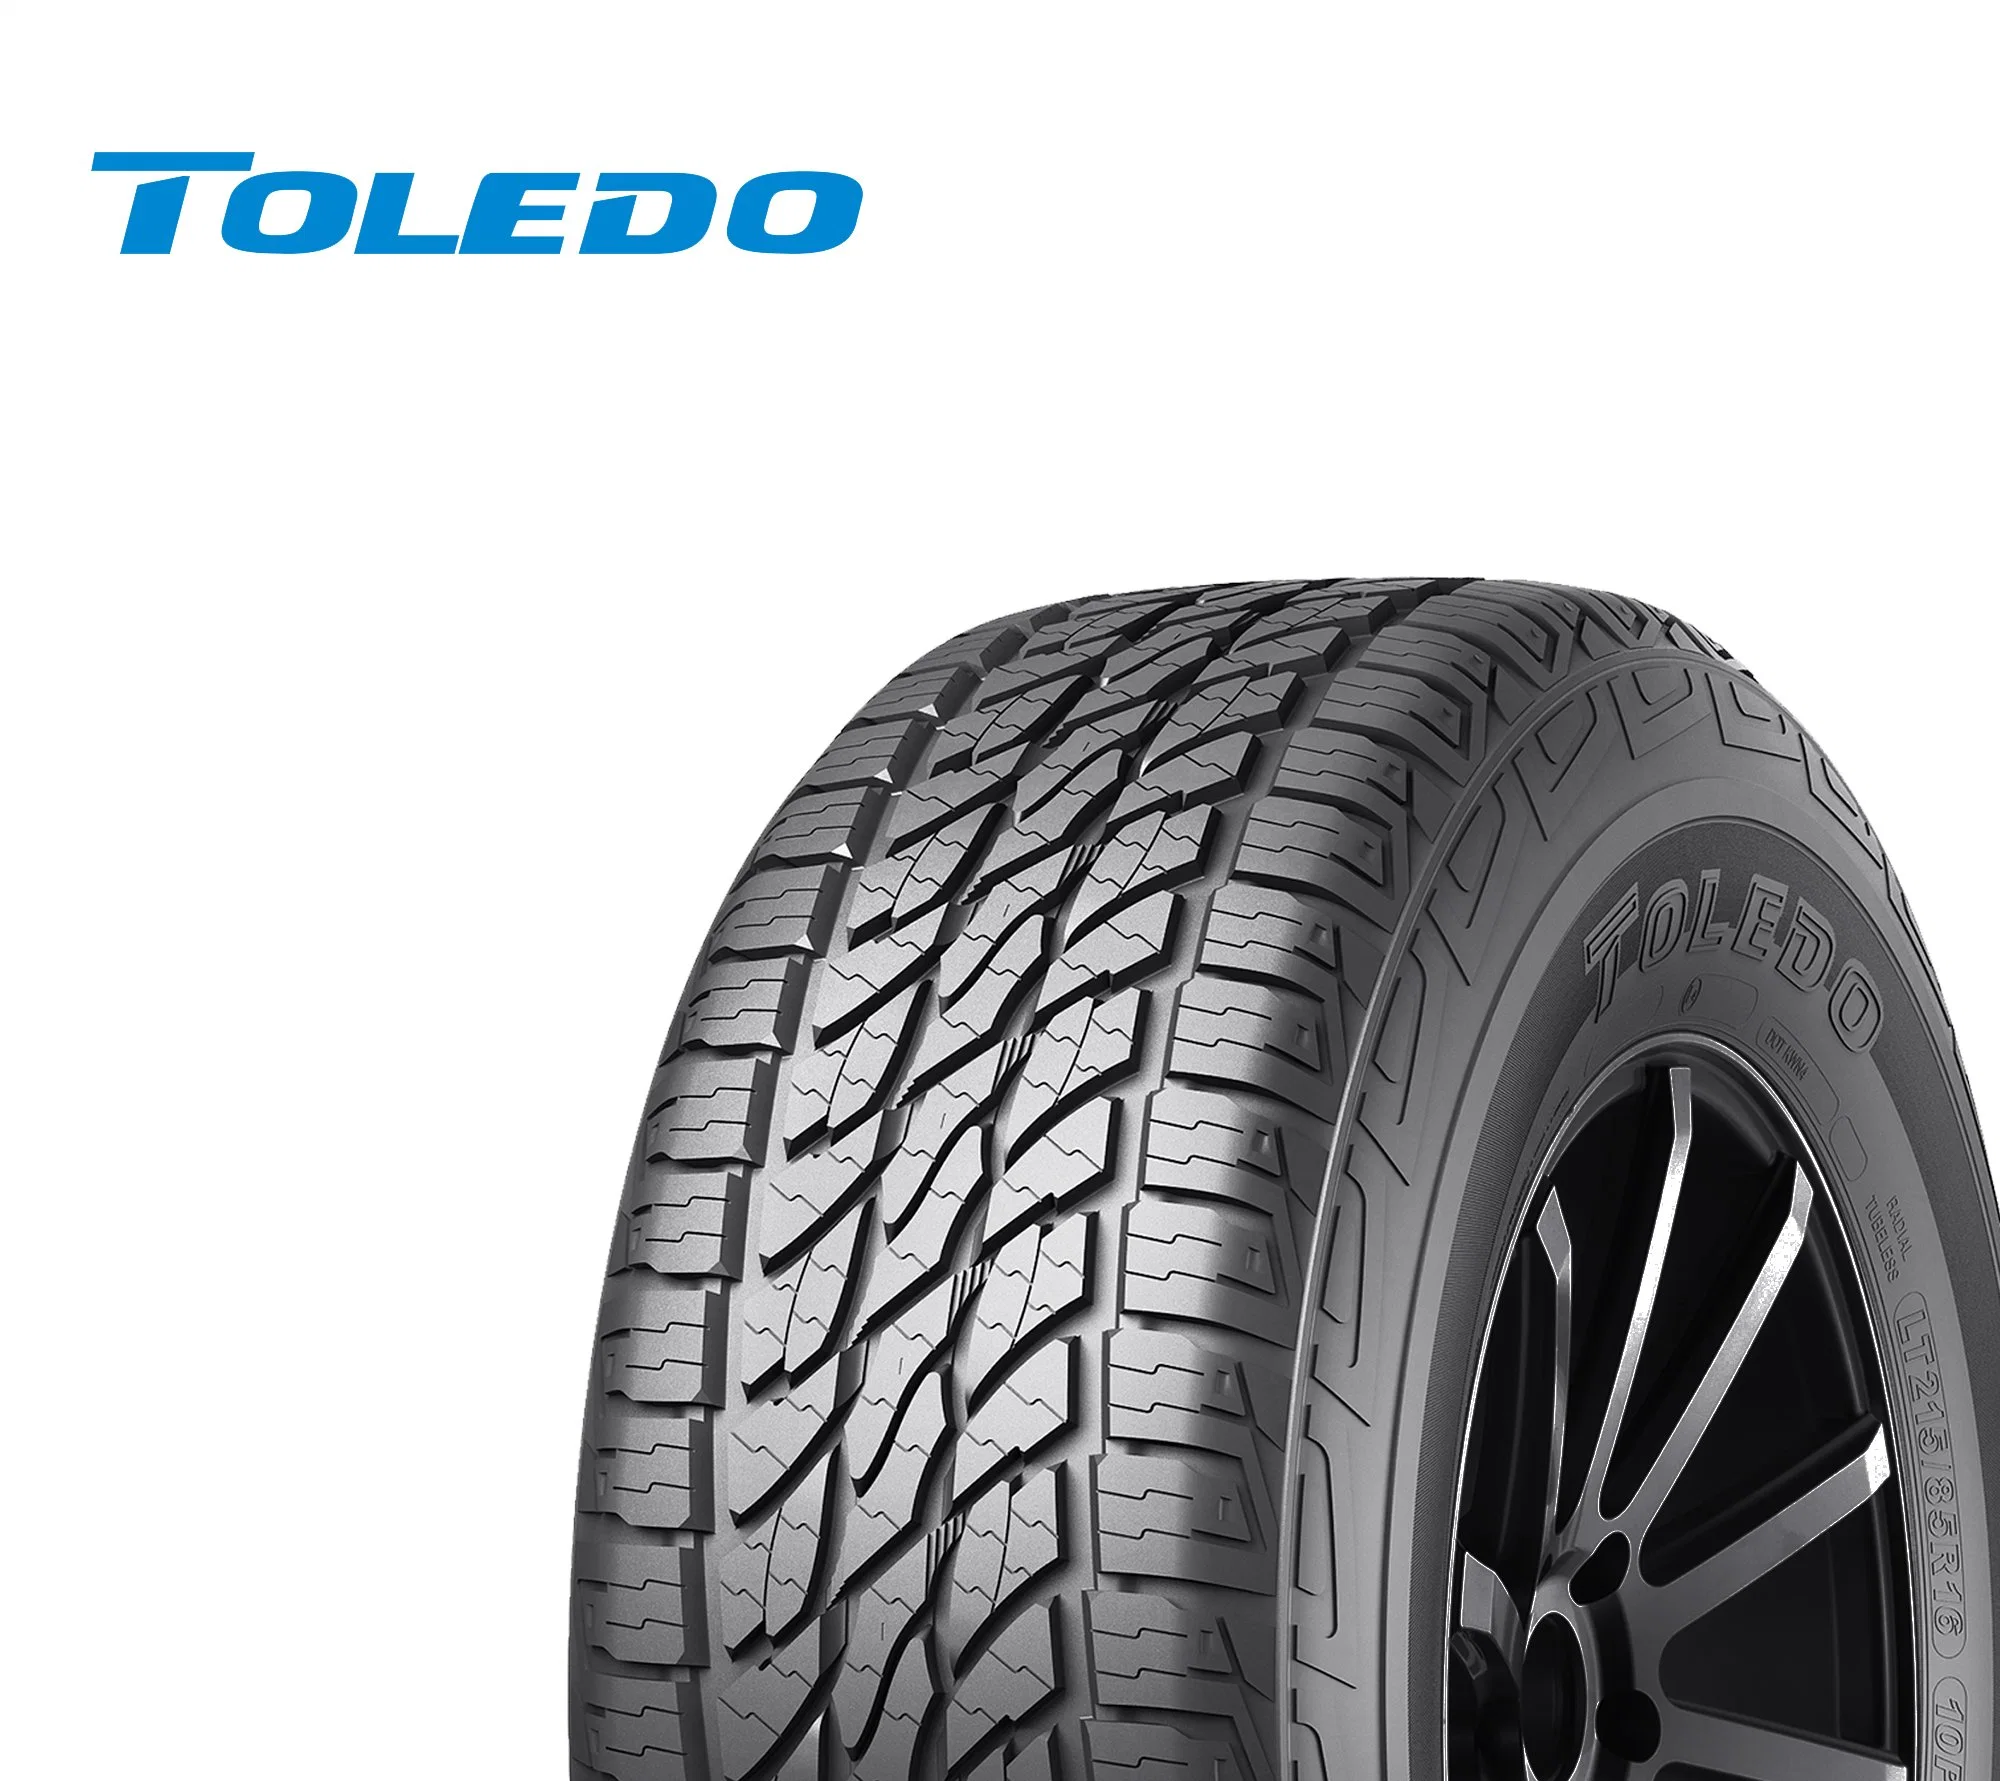 Toledo Brand Natural Rubber Passenger Car Tire